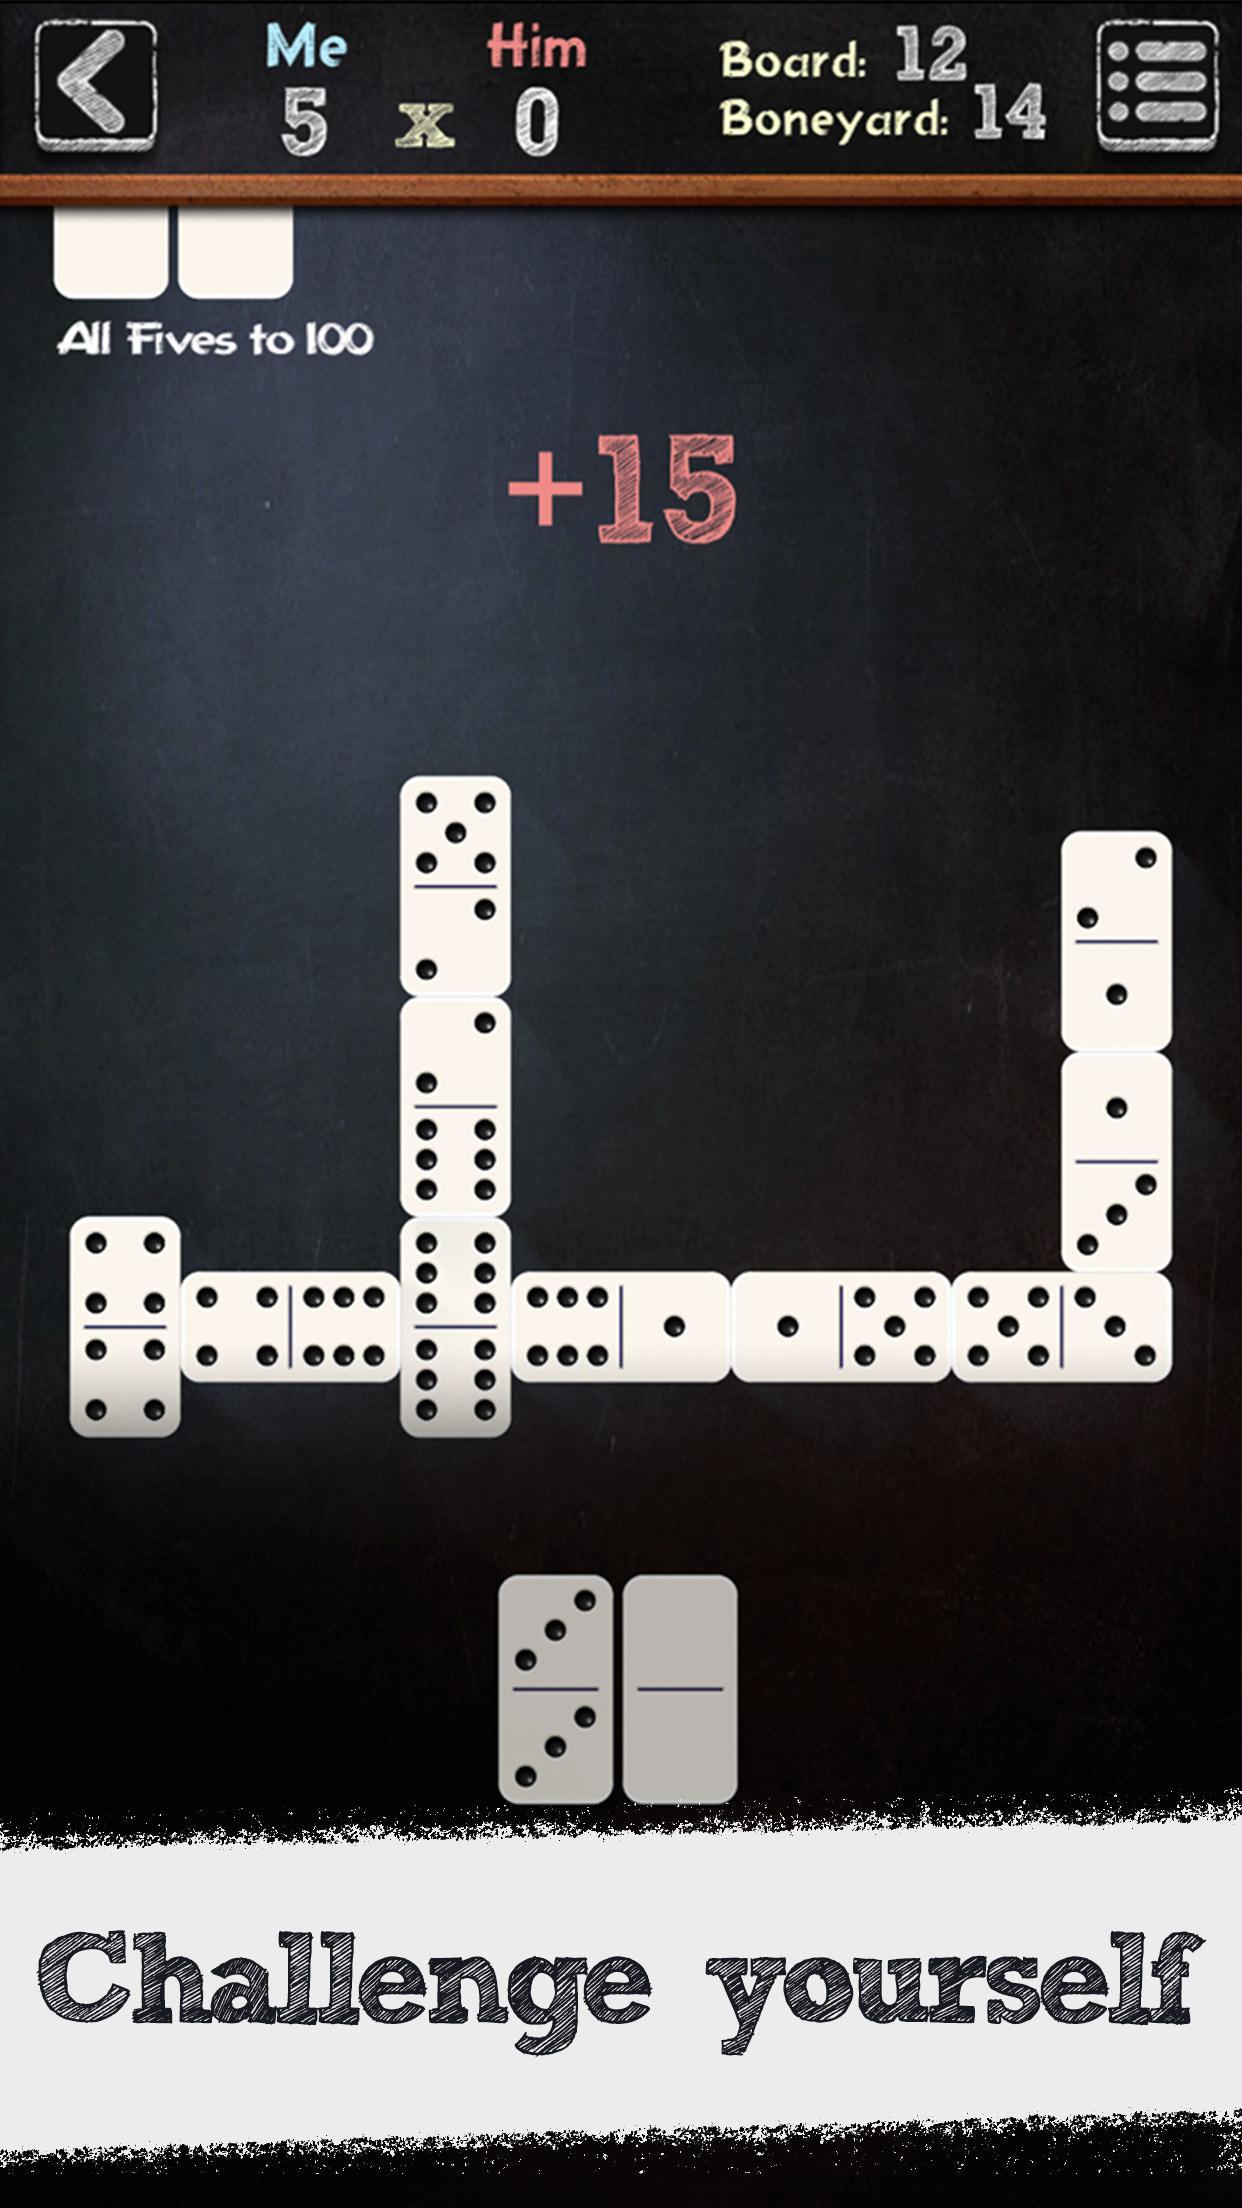 Dominoes - Classic dominos game遊戲截圖